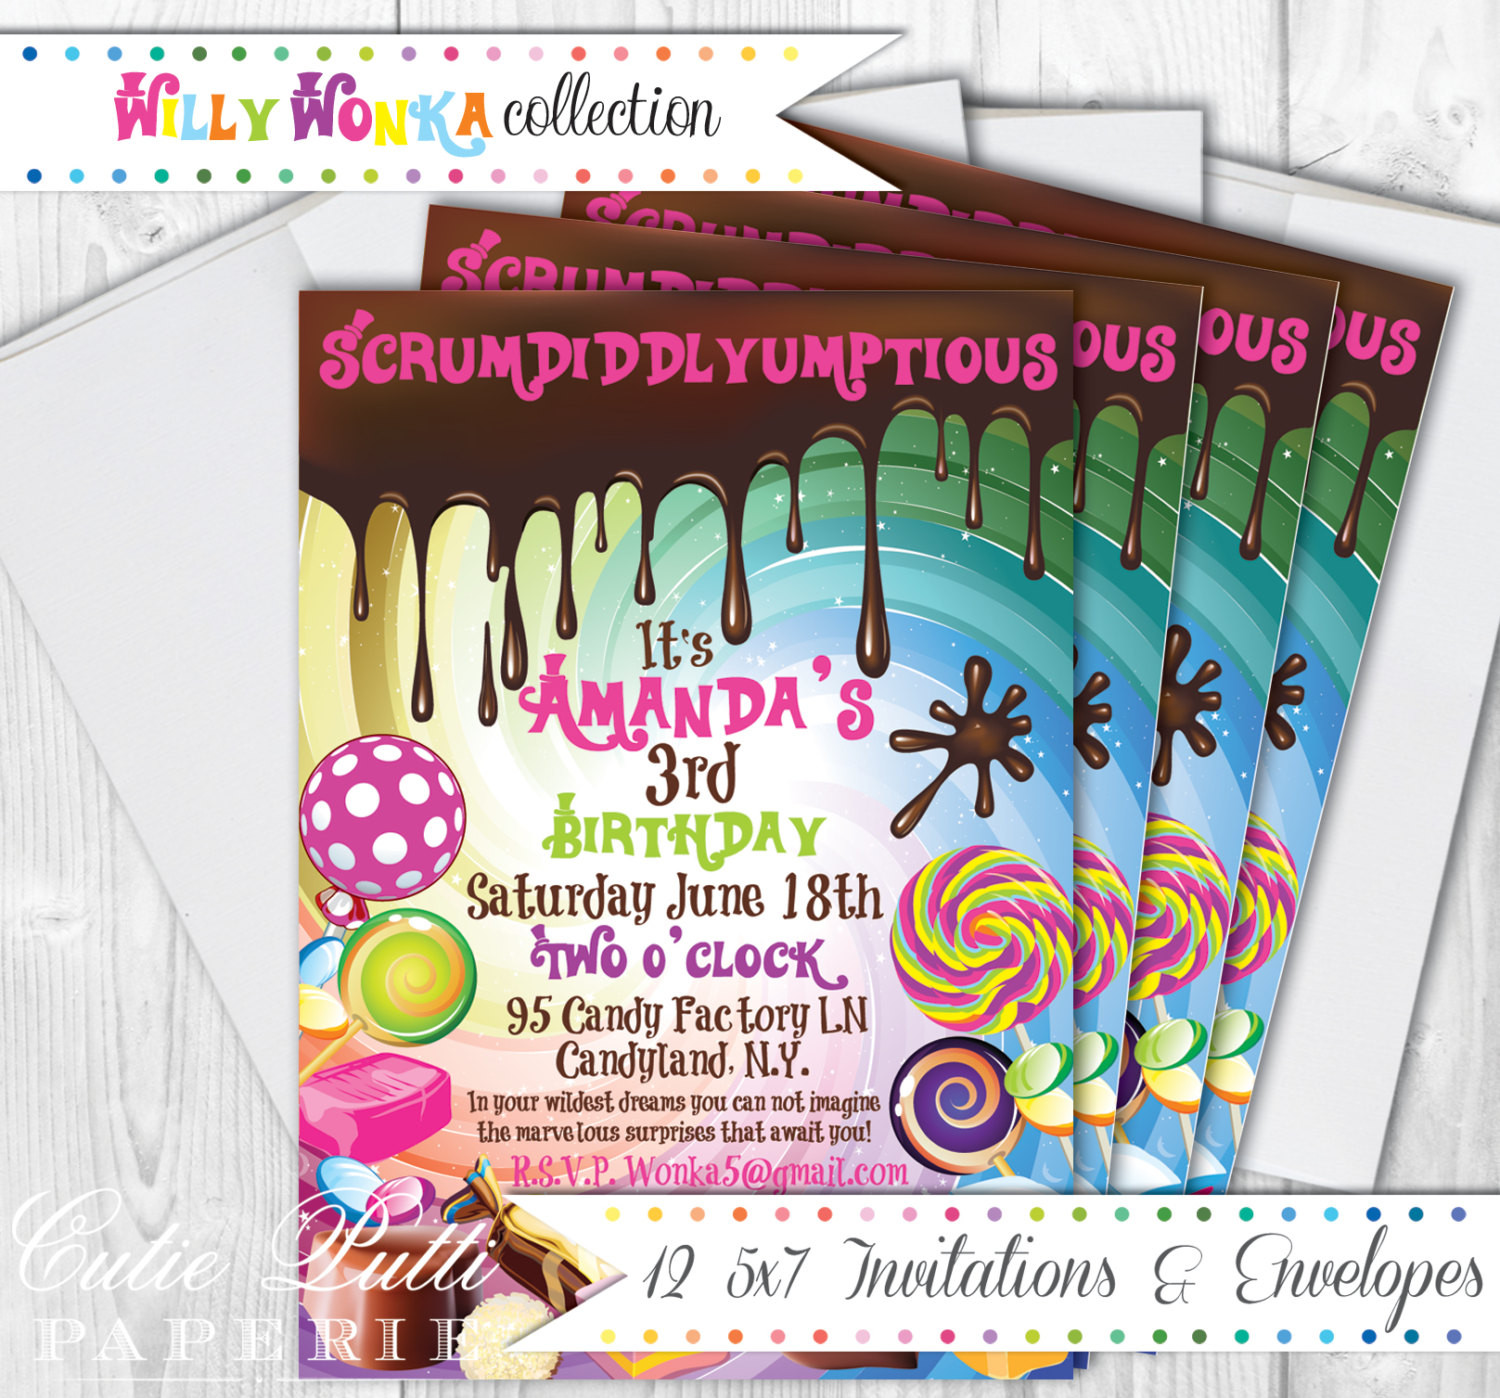 Willy Wonka Birthday Invitations
 Willy Wonka Party Invitations 5x7 Custom Invitations by Cutie